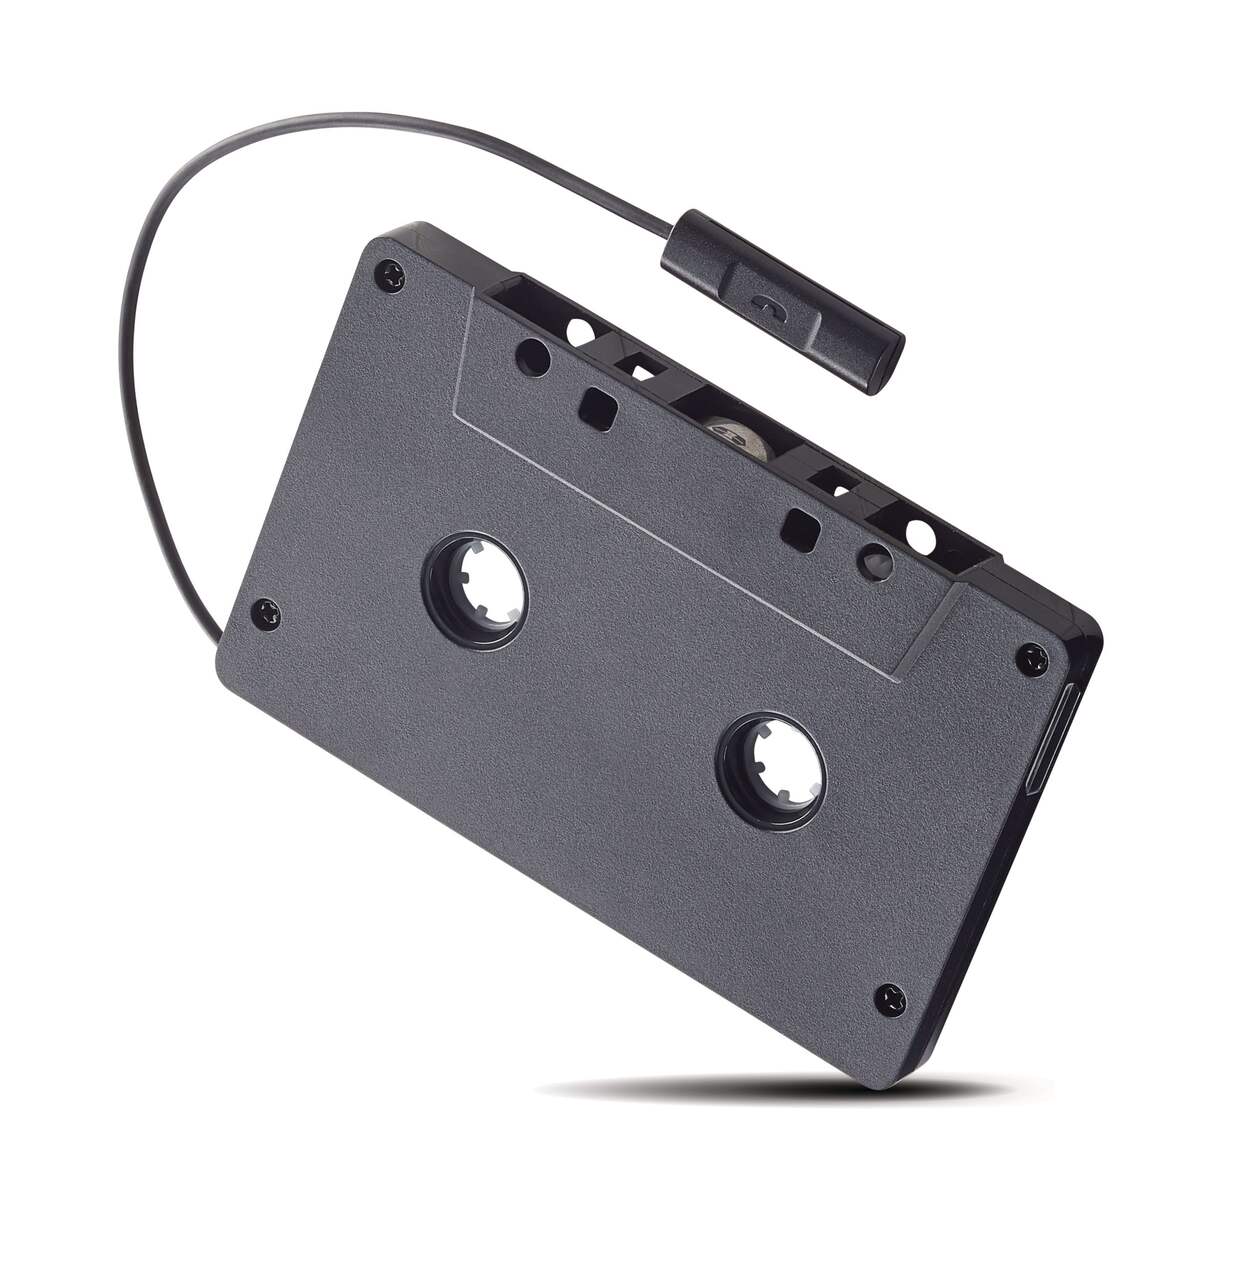 ION Cassette Adapter Bluetooth Adaptateur sans fil